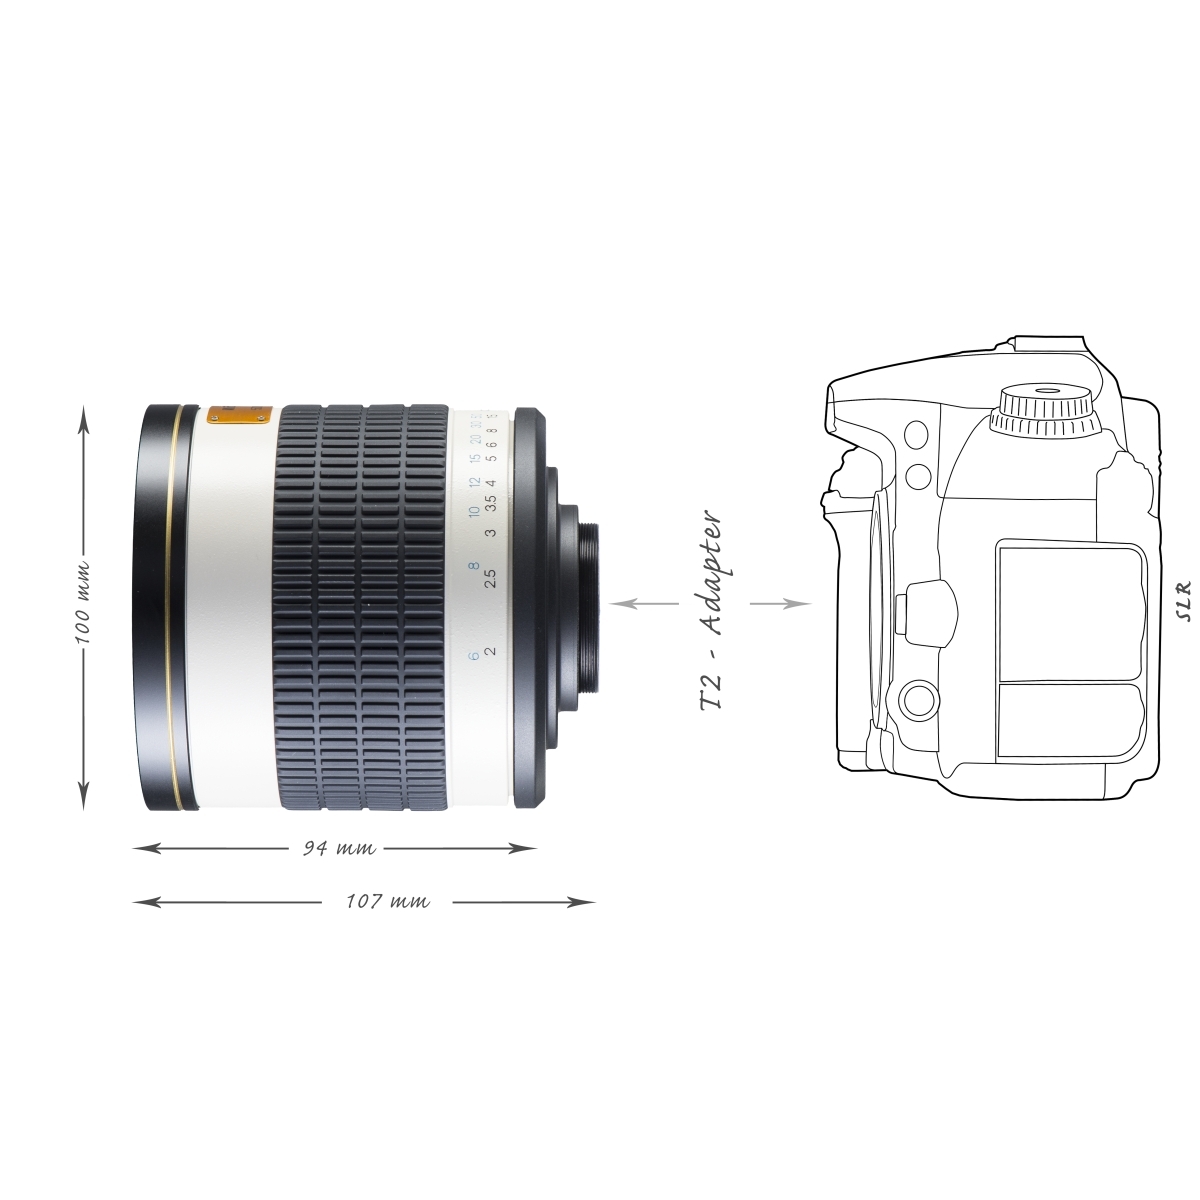 Walimex 500/6,3 DX DSLR Mirror Canon EF white